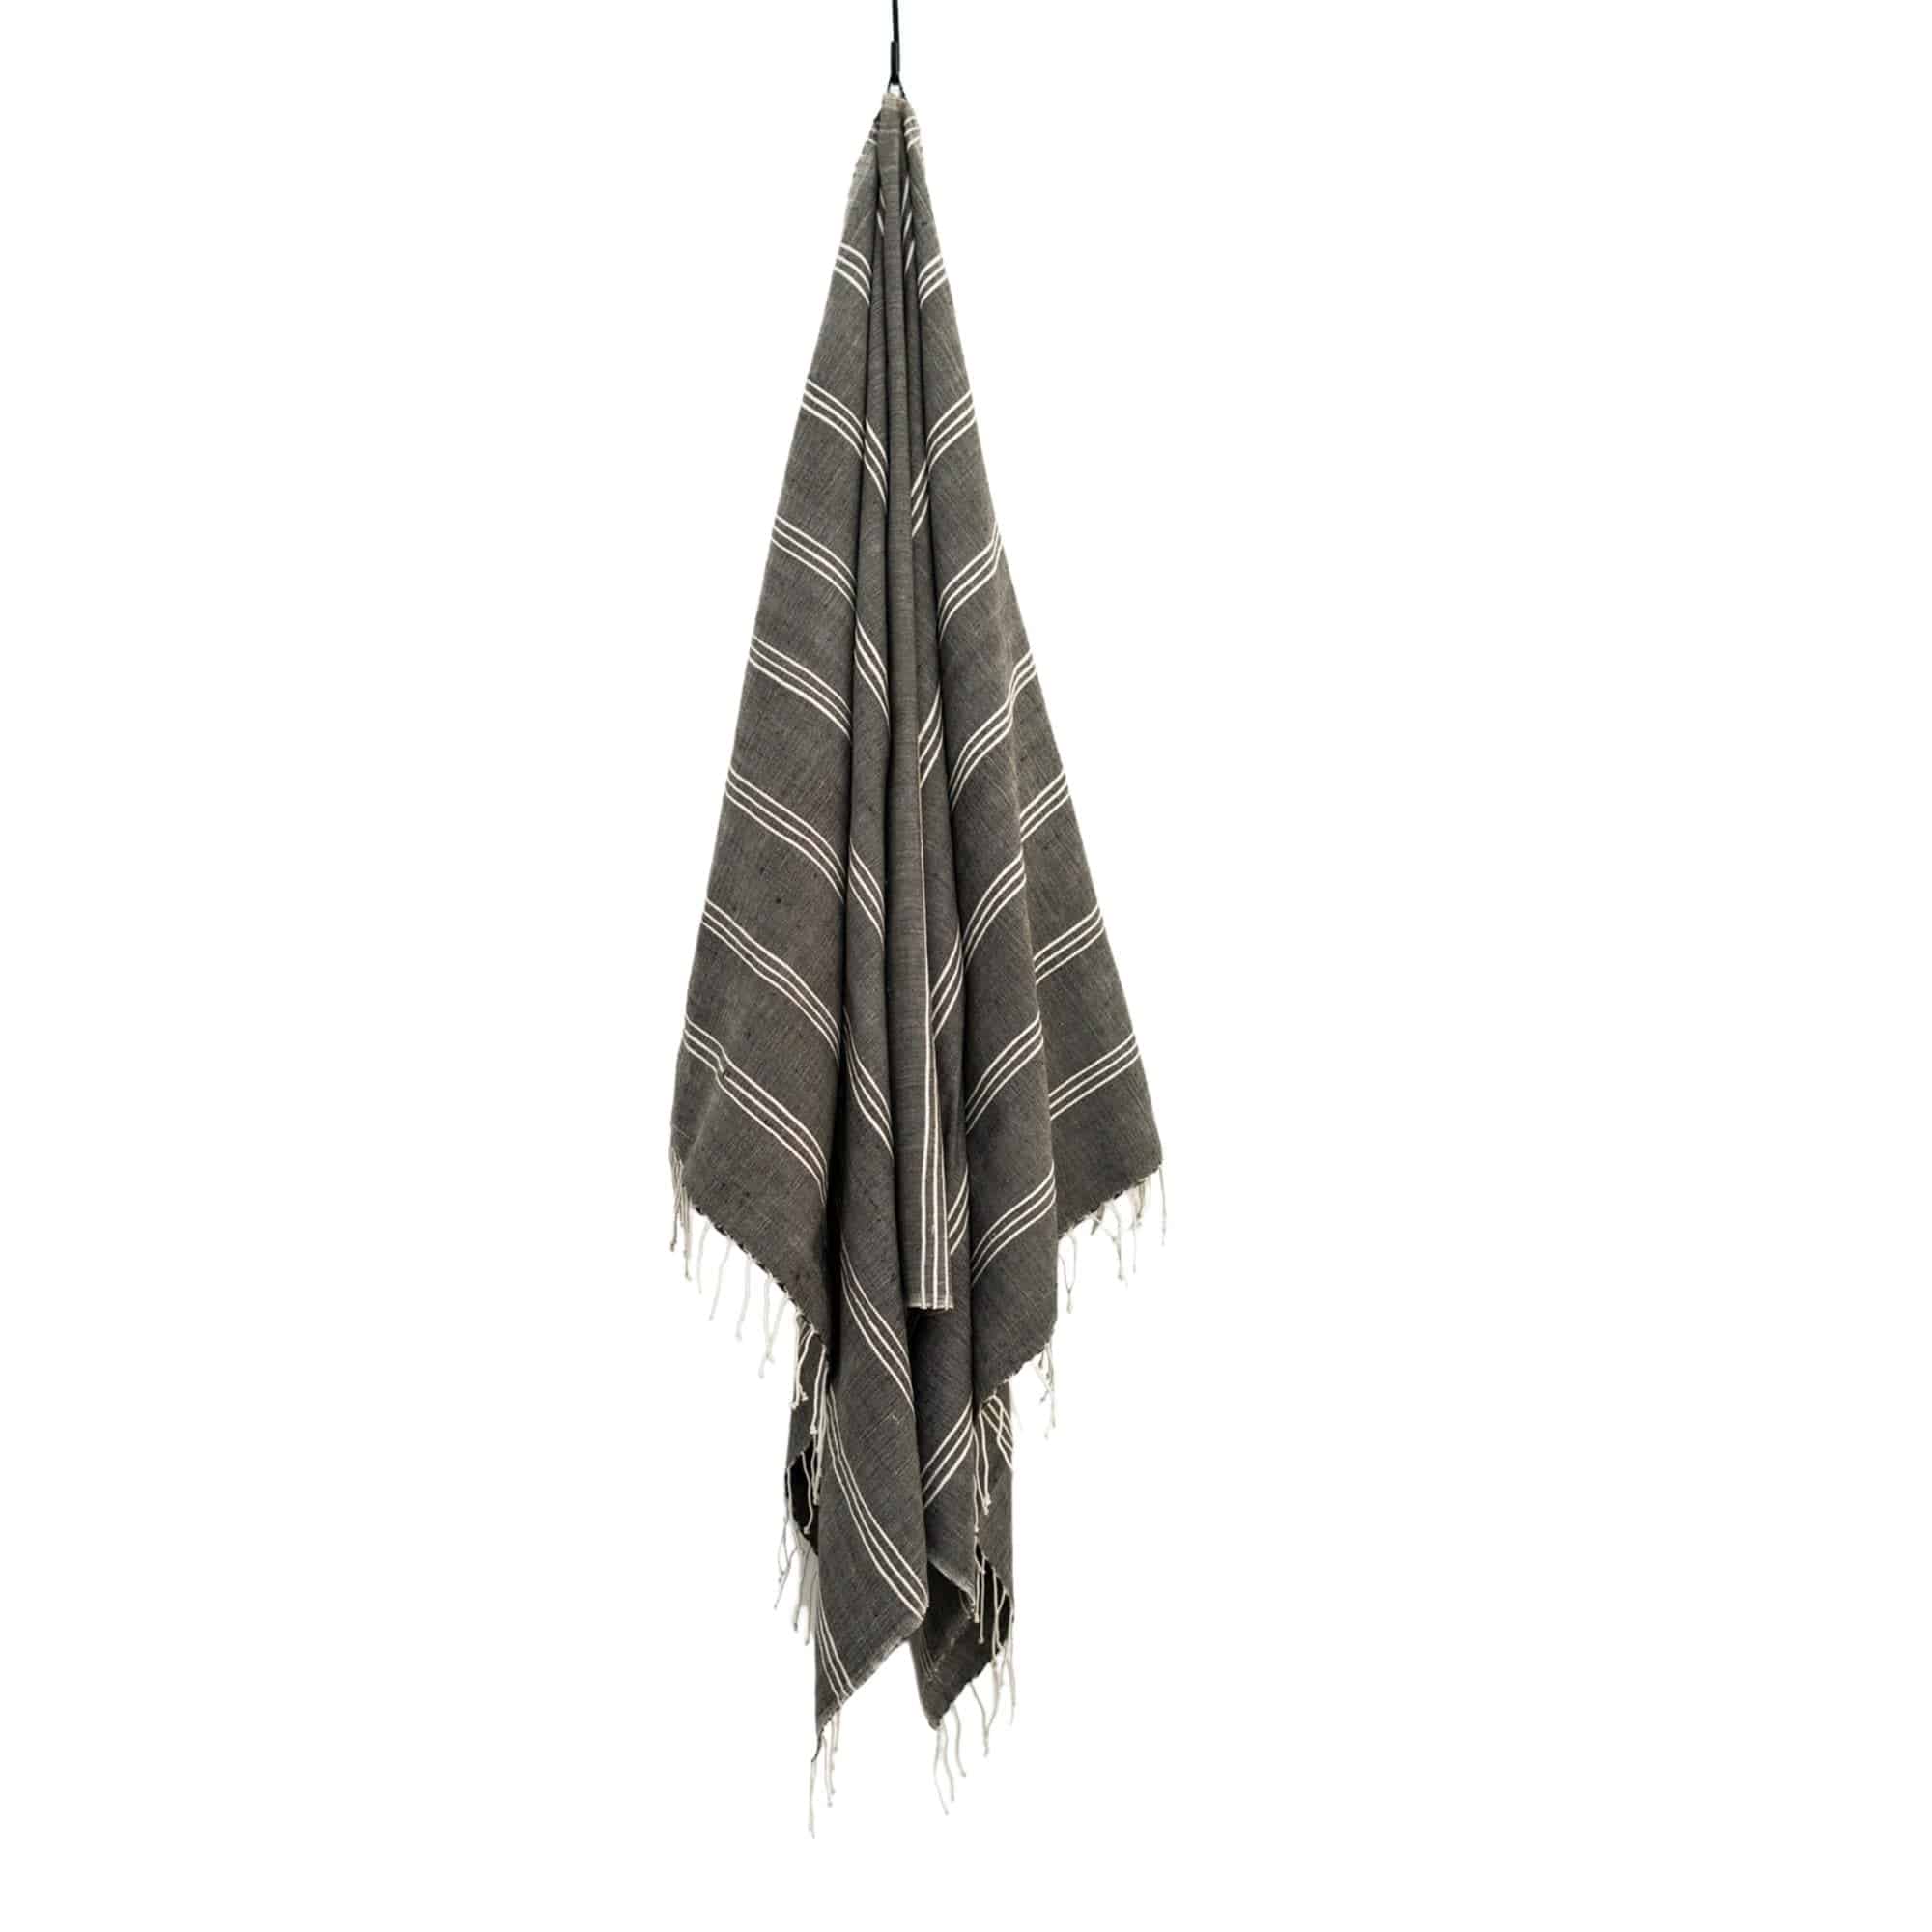 Tihku Towel - THAT COOL LIVING